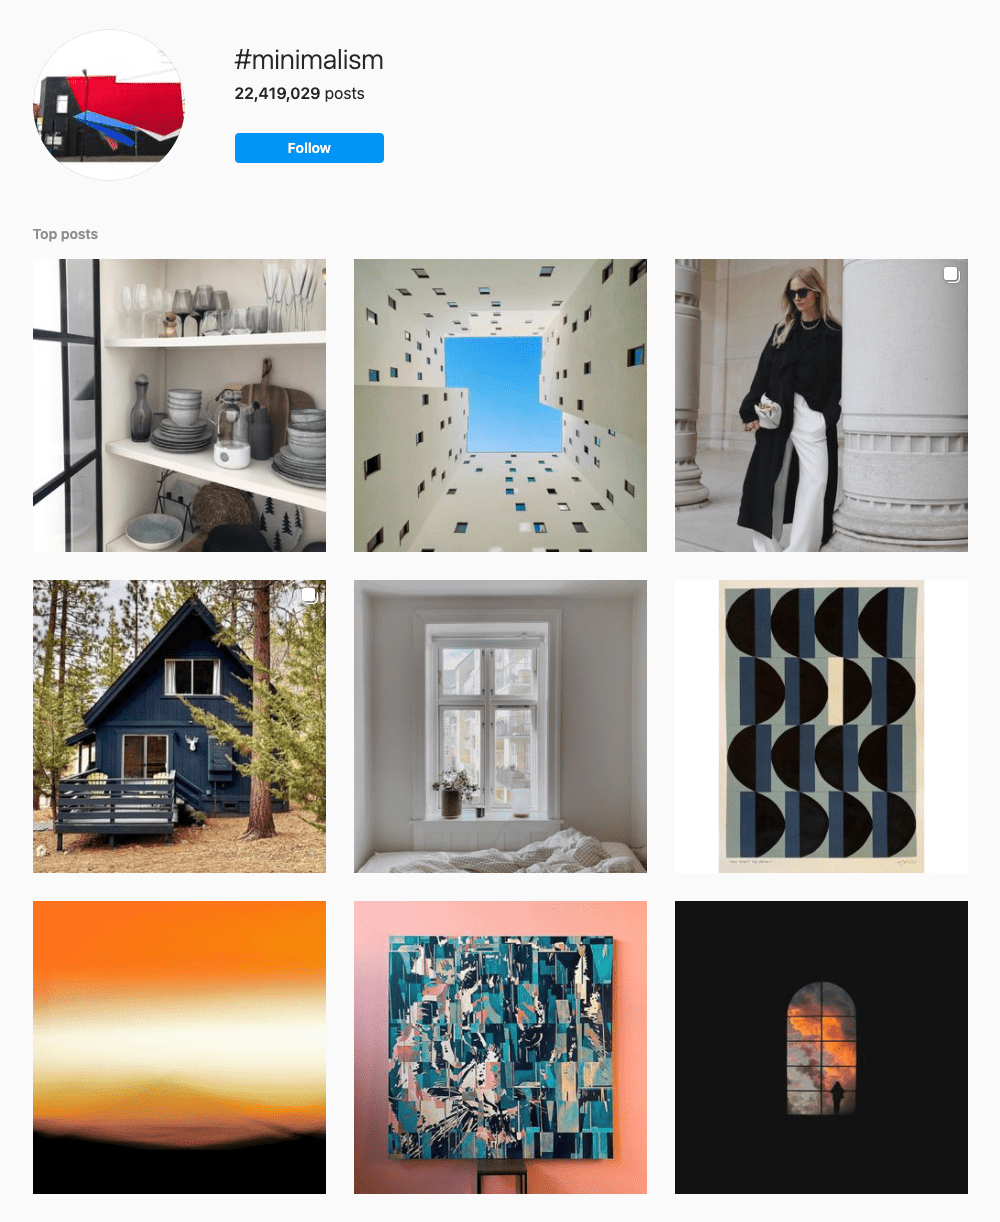 #minimalism Hashtags for Instagram